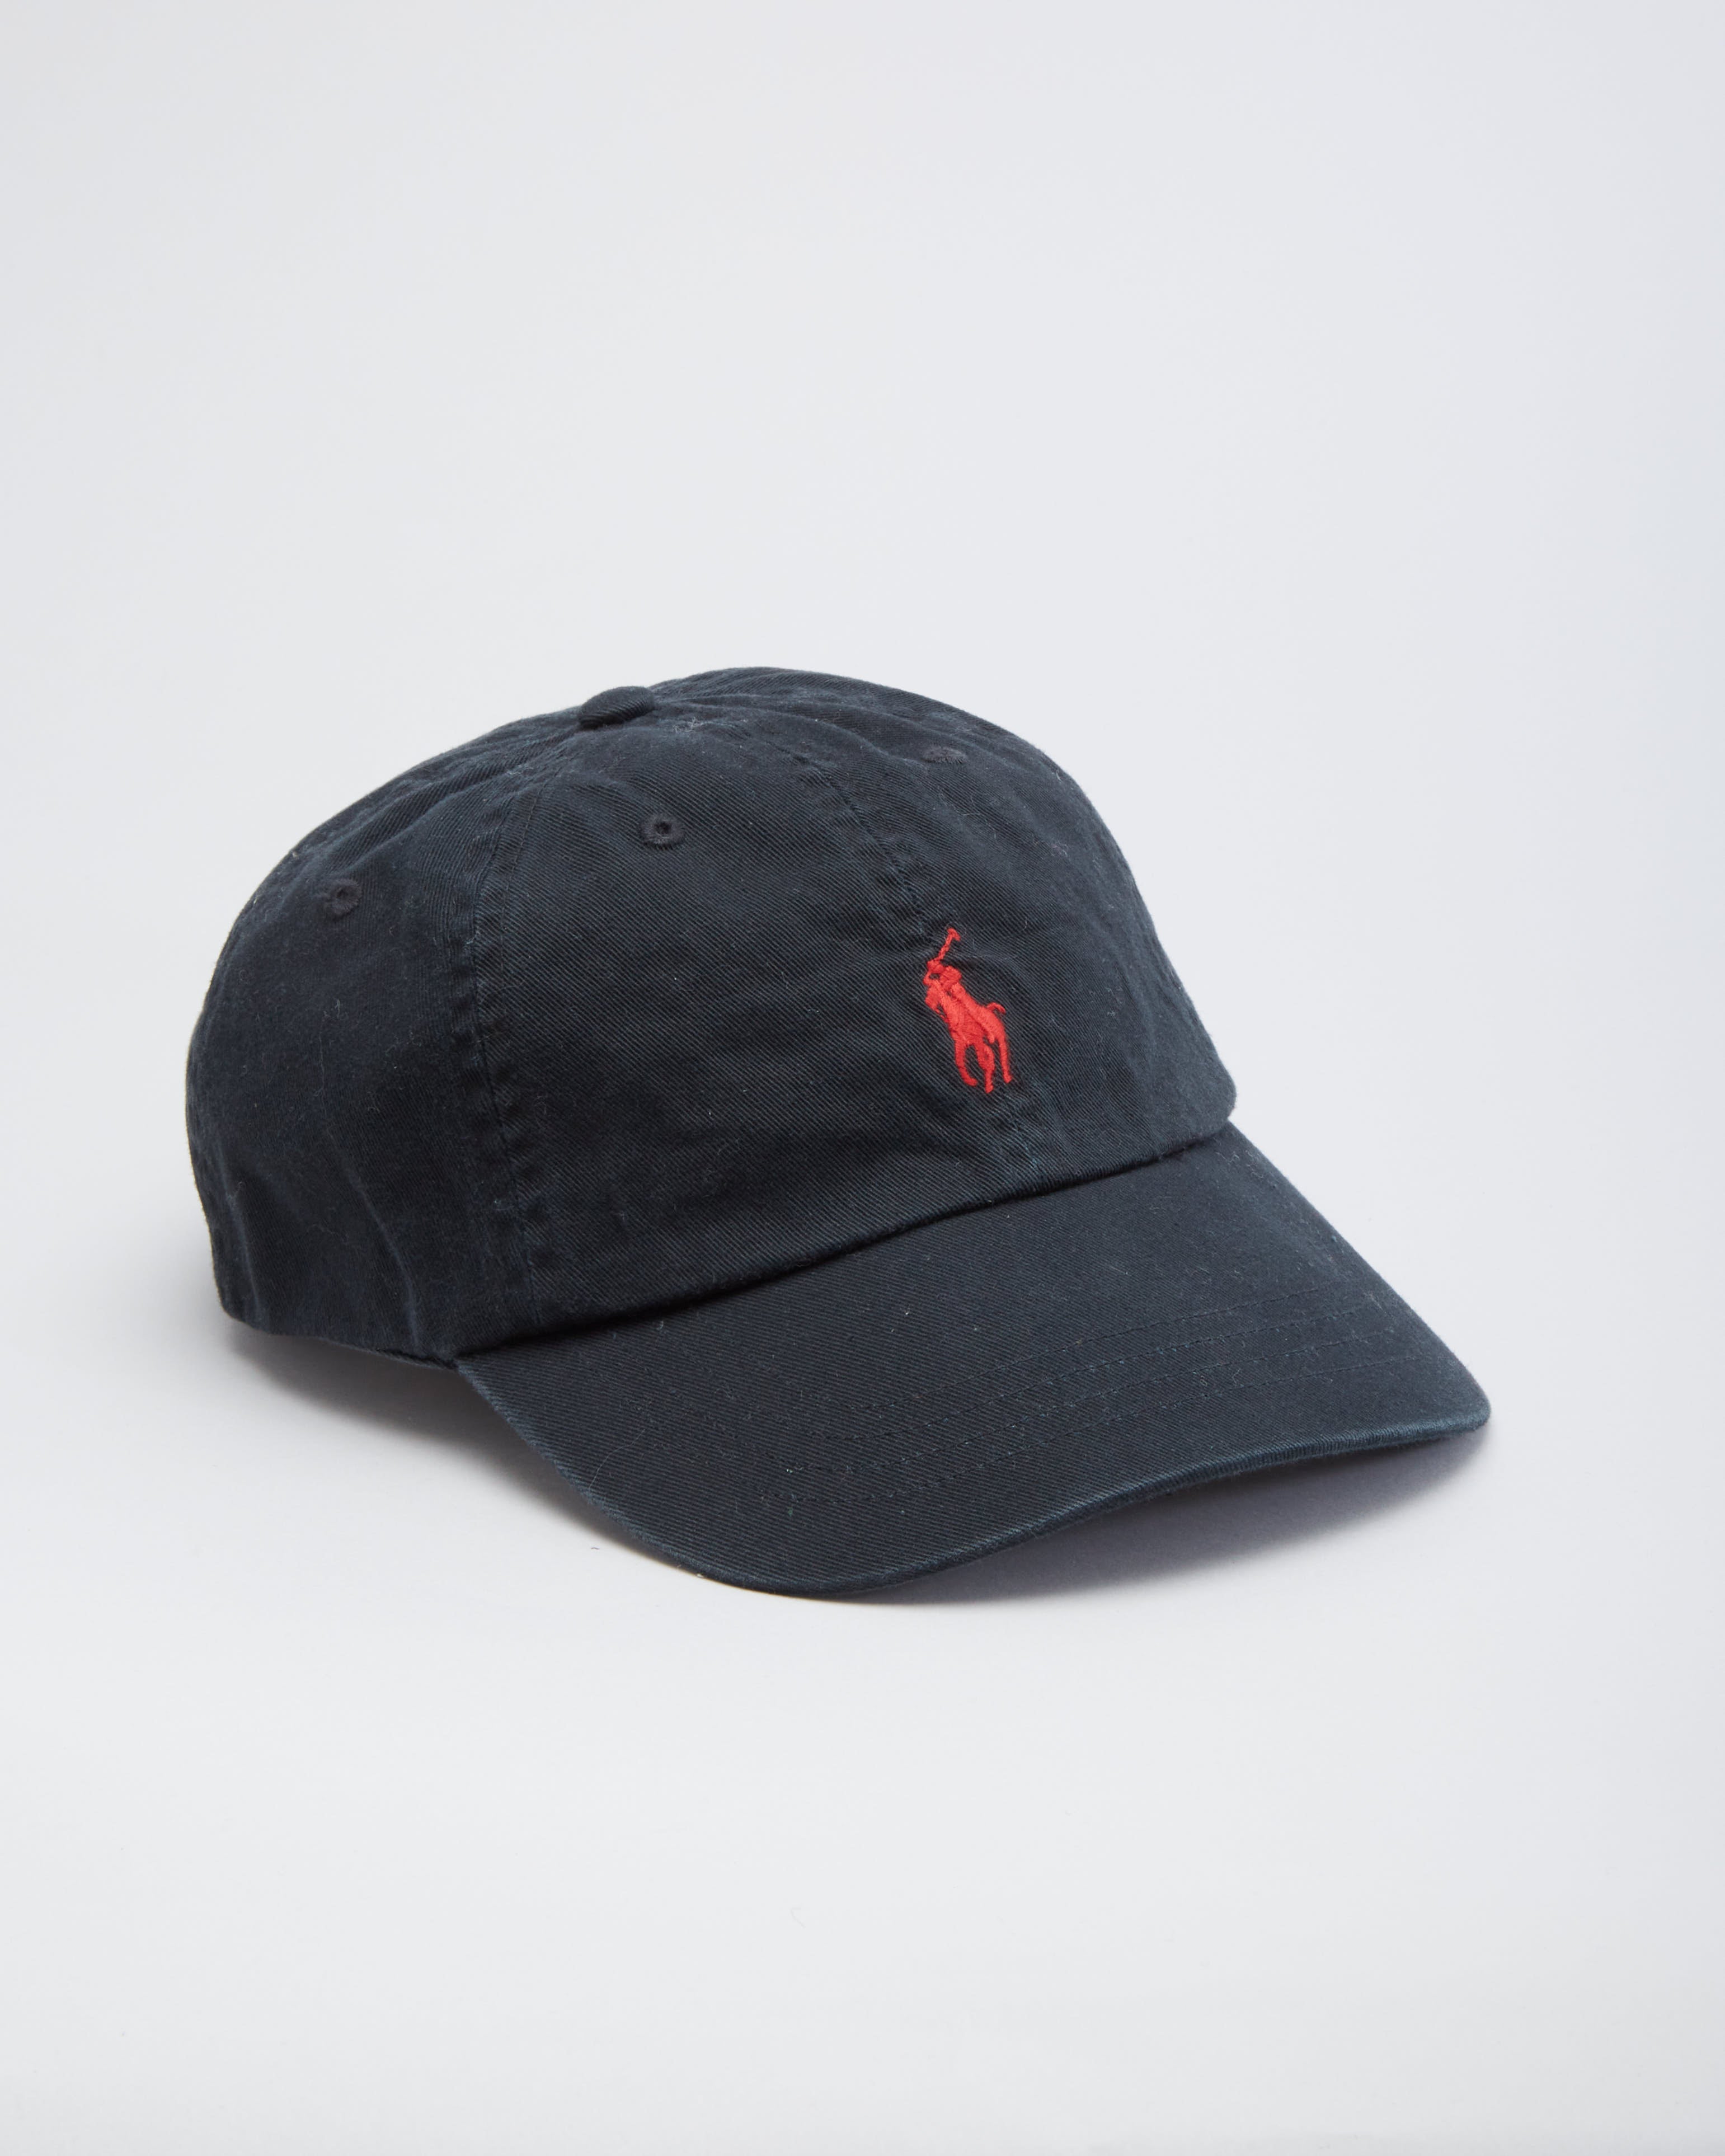 Vintage 90s Ralph Lauren Polo Black Baseball Cap / Hat